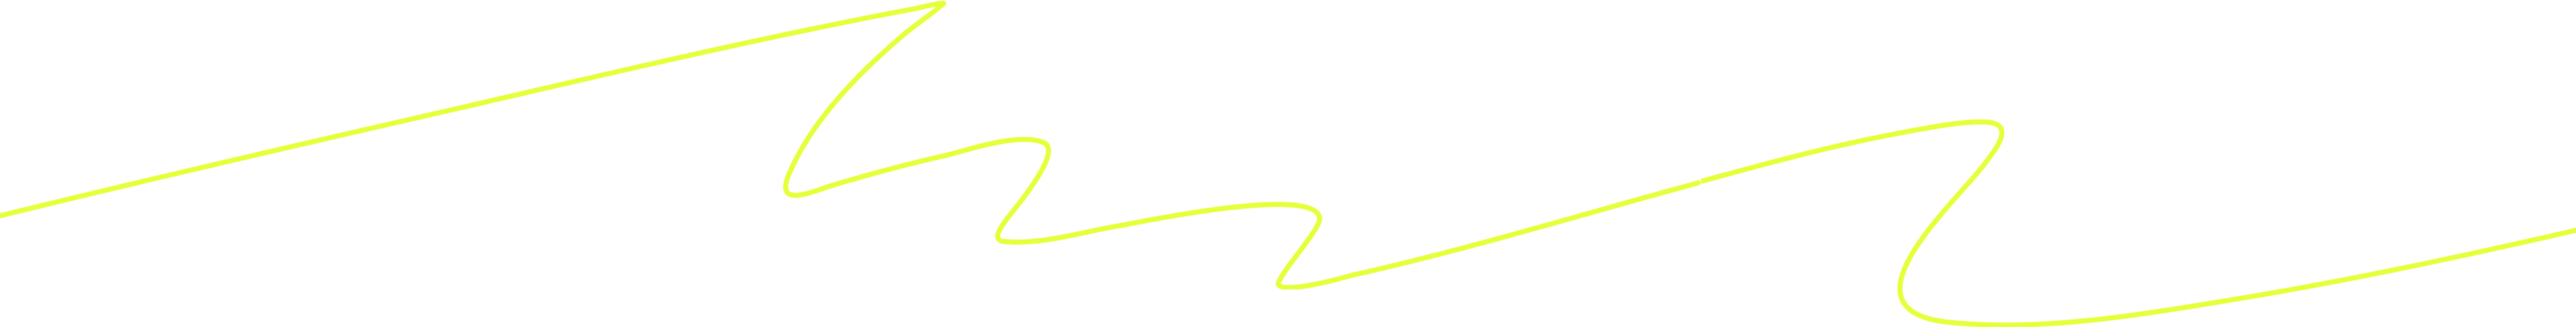 yellow line background